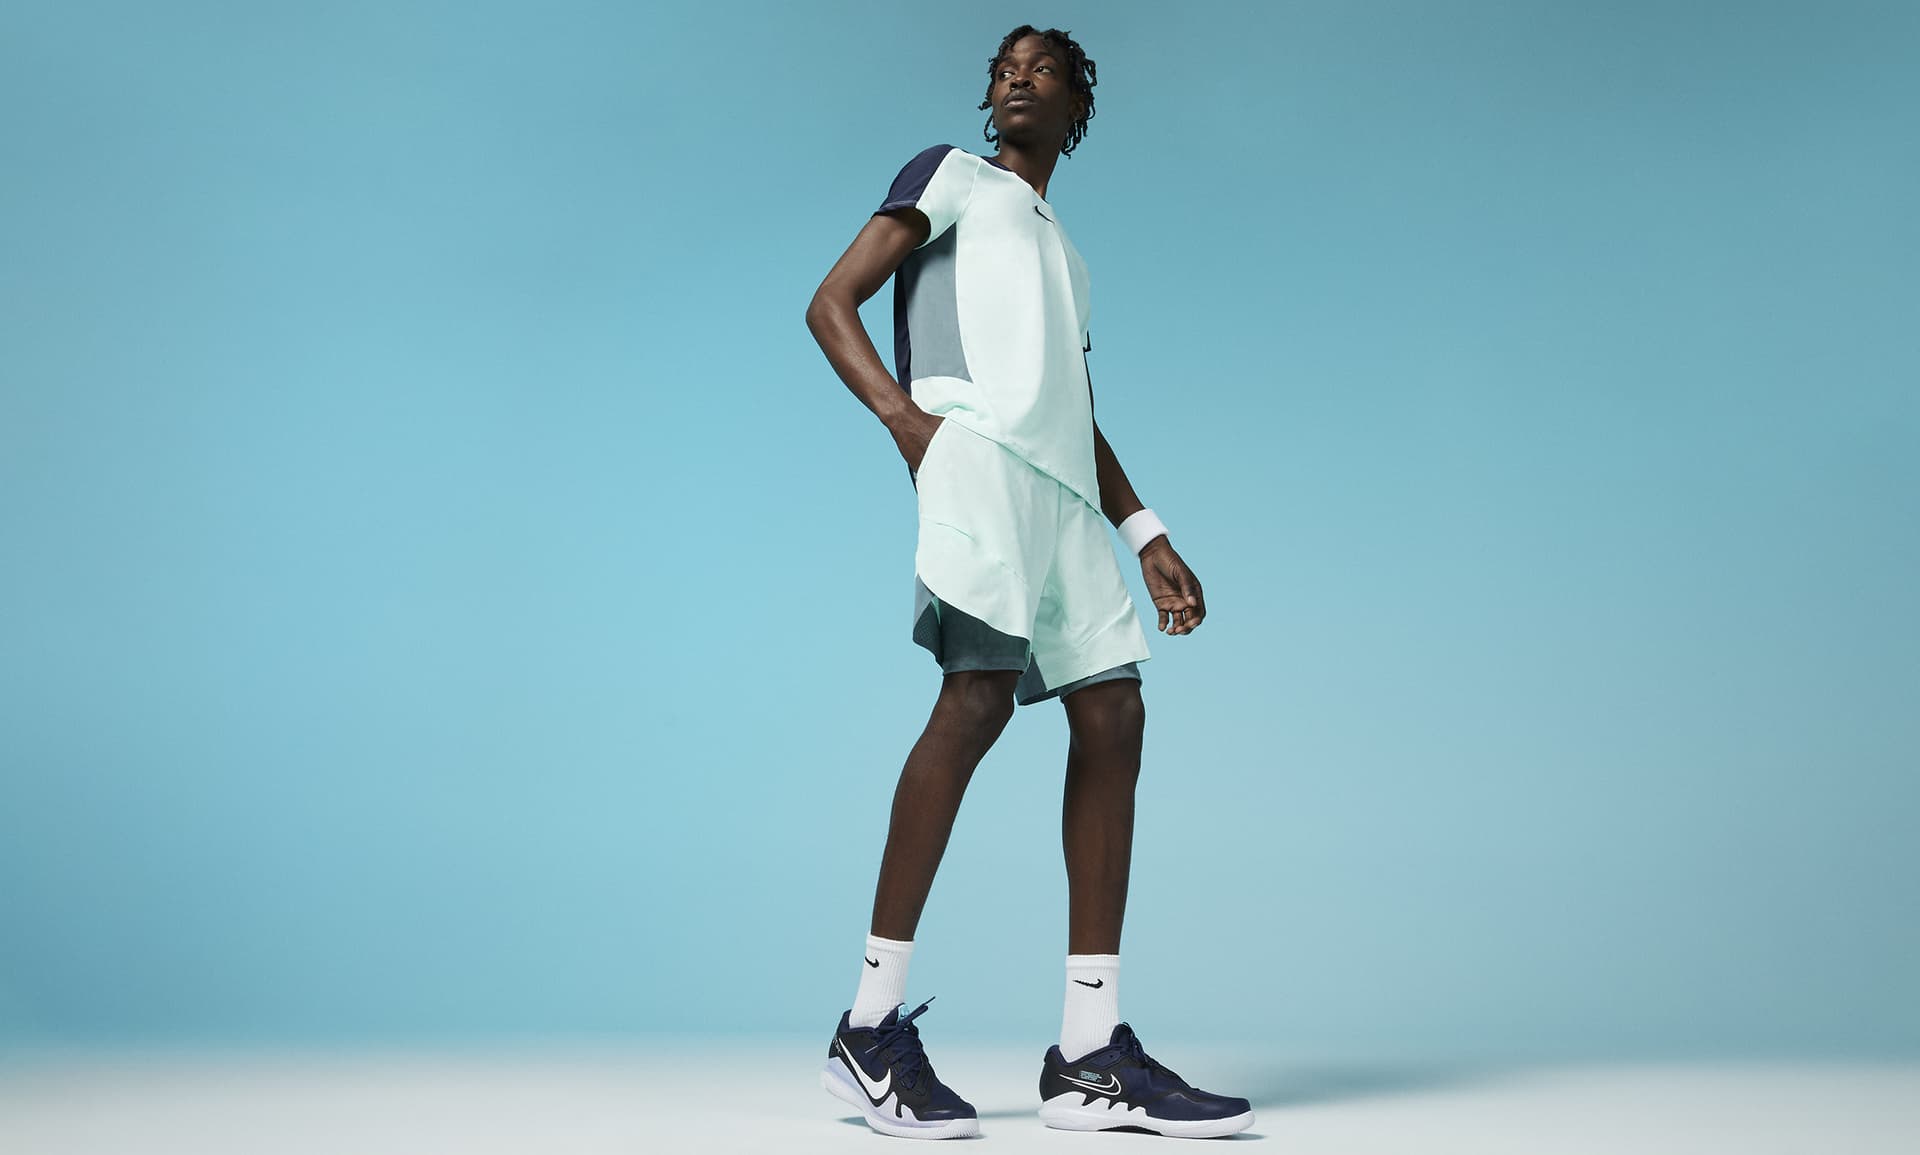 Air Zoom Men's Hard Court Tennis Shoes. Nike.com